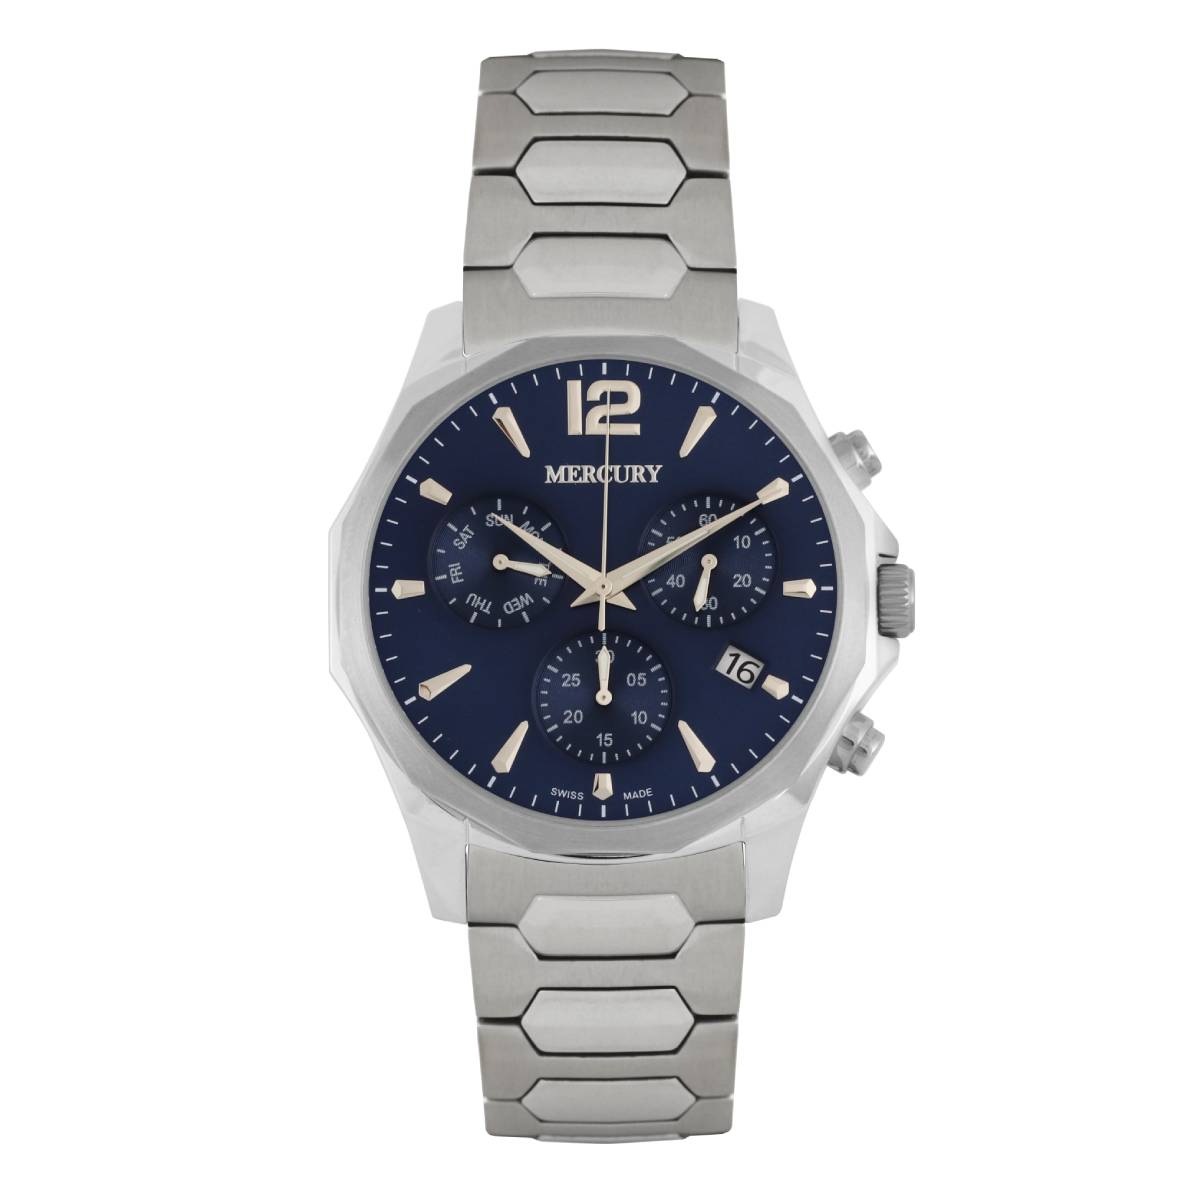 Mercury Men's Swiss Quartz Watch with Blue Dial - MER-0014